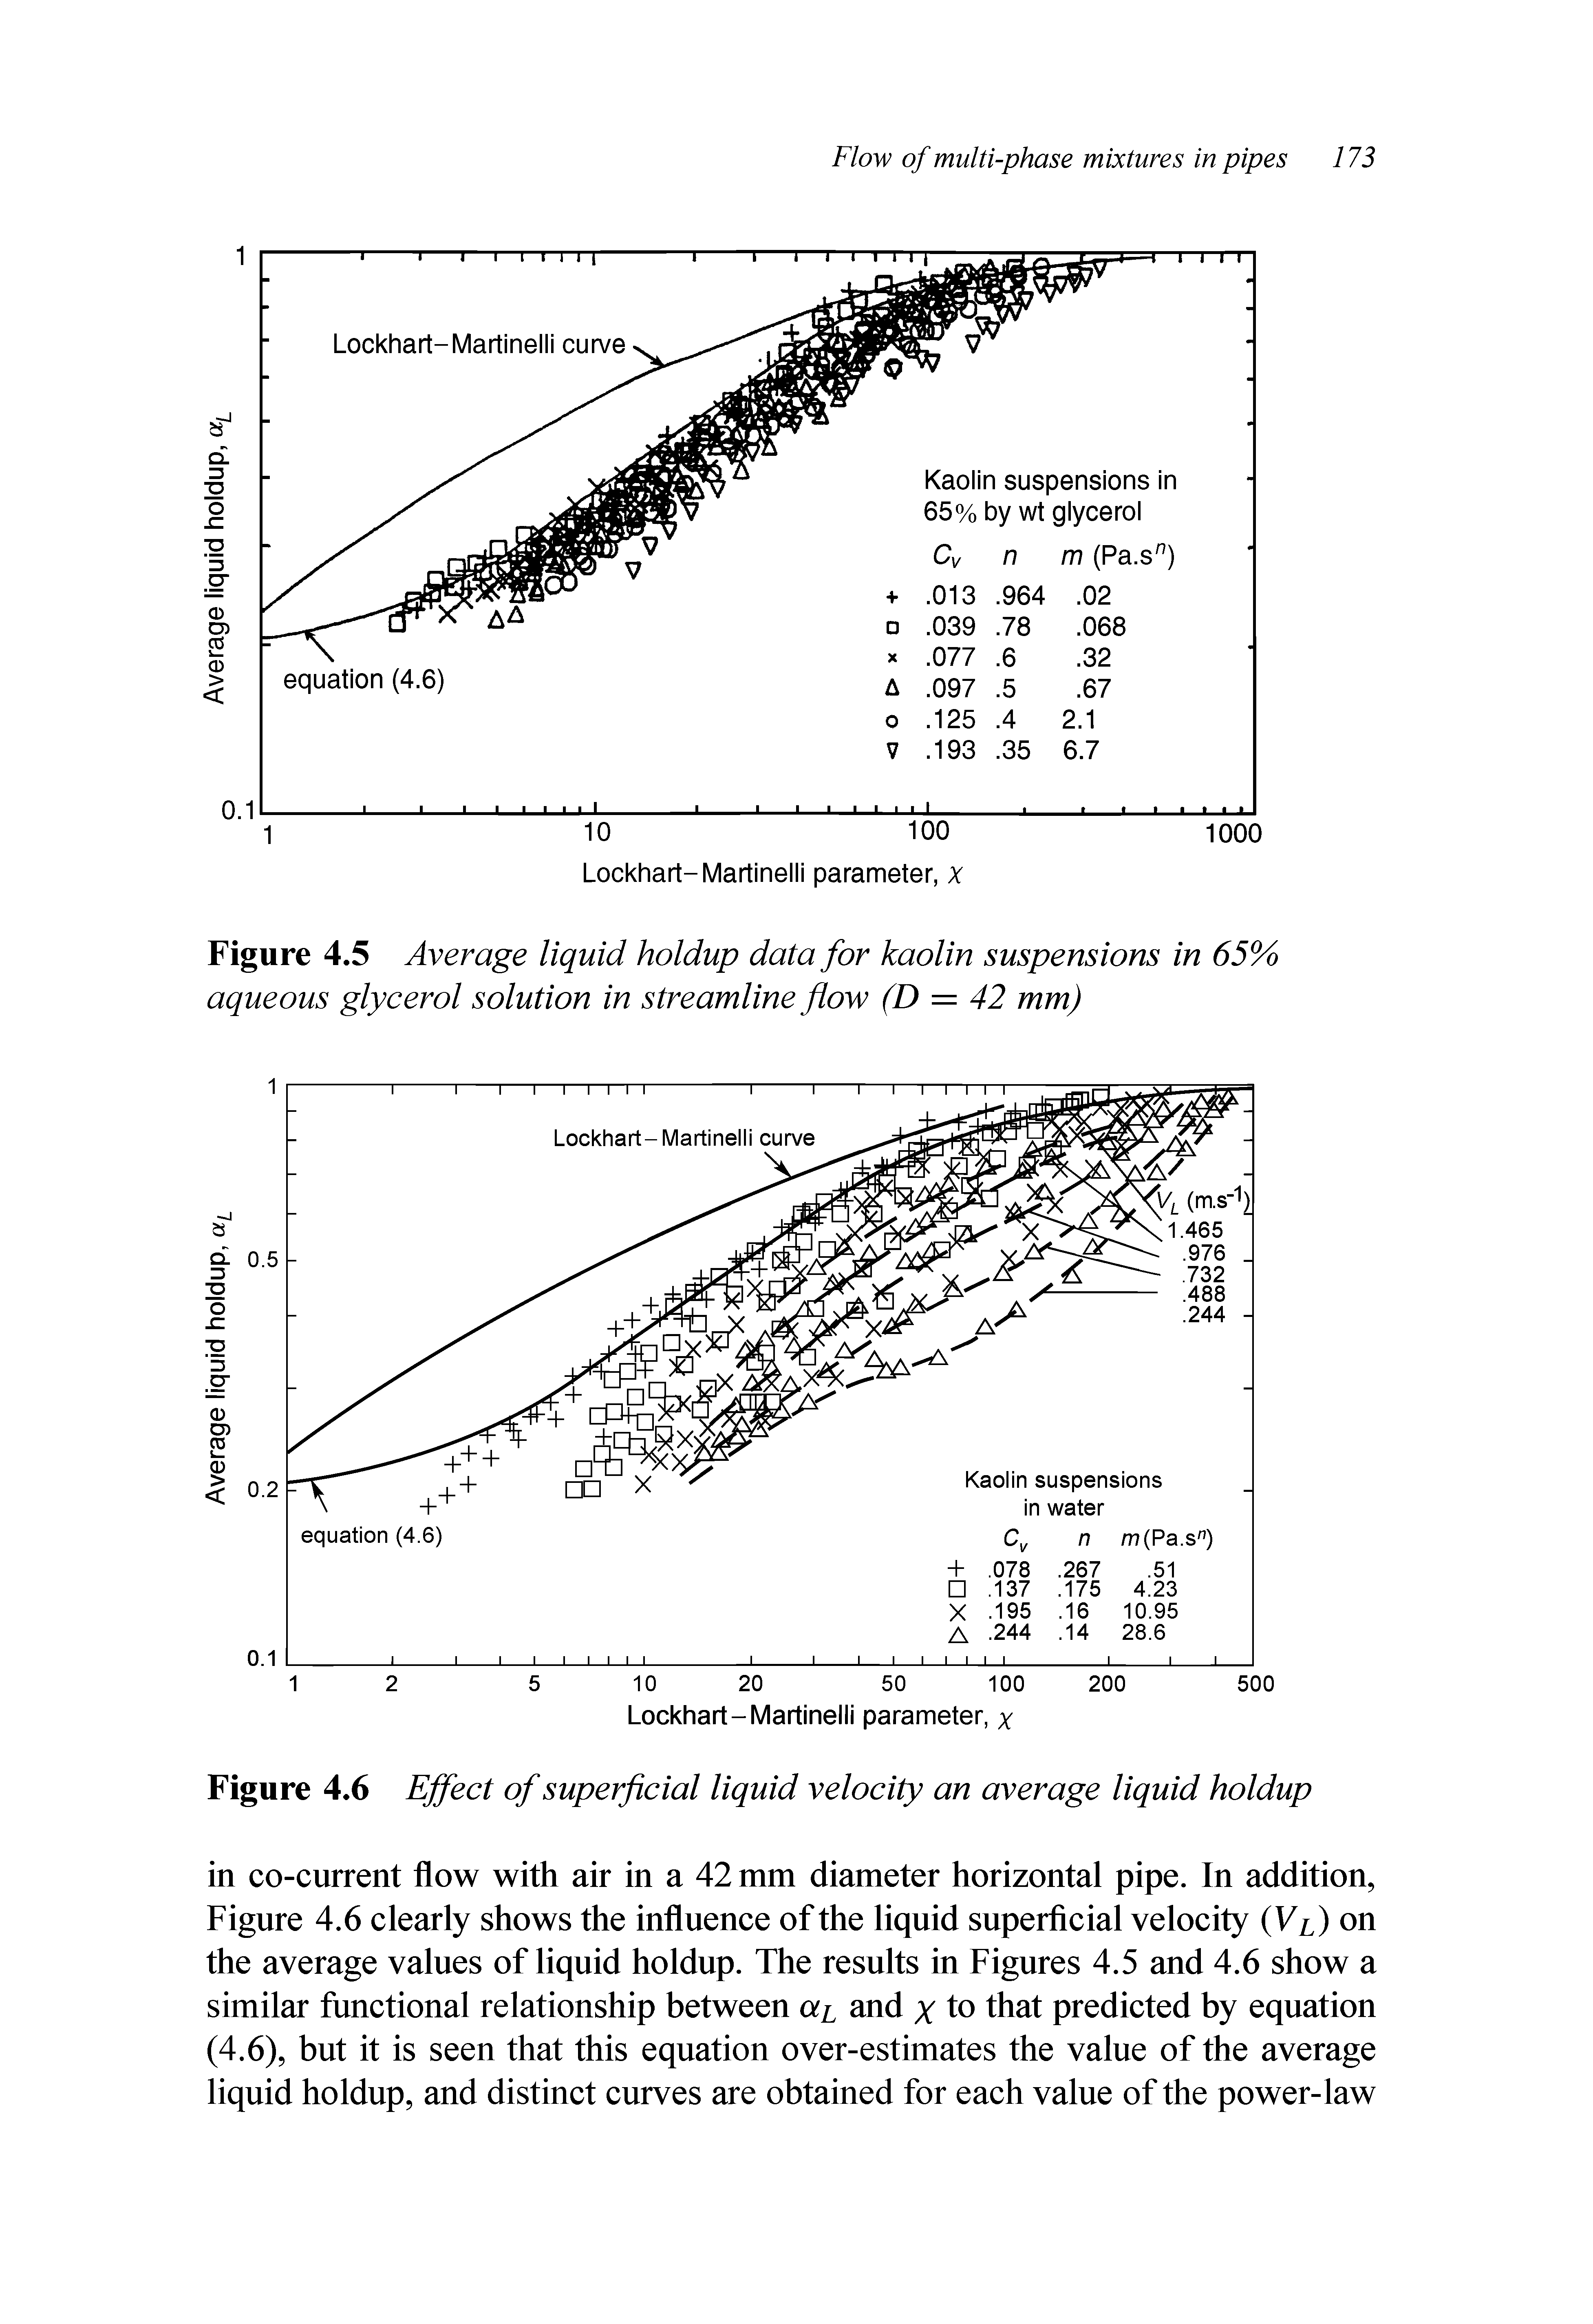 Figure 4.5 Average liquid holdup data for kaolin suspensions in 65% aqueous glycerol solution in streamline flow (D = 42 mm)...